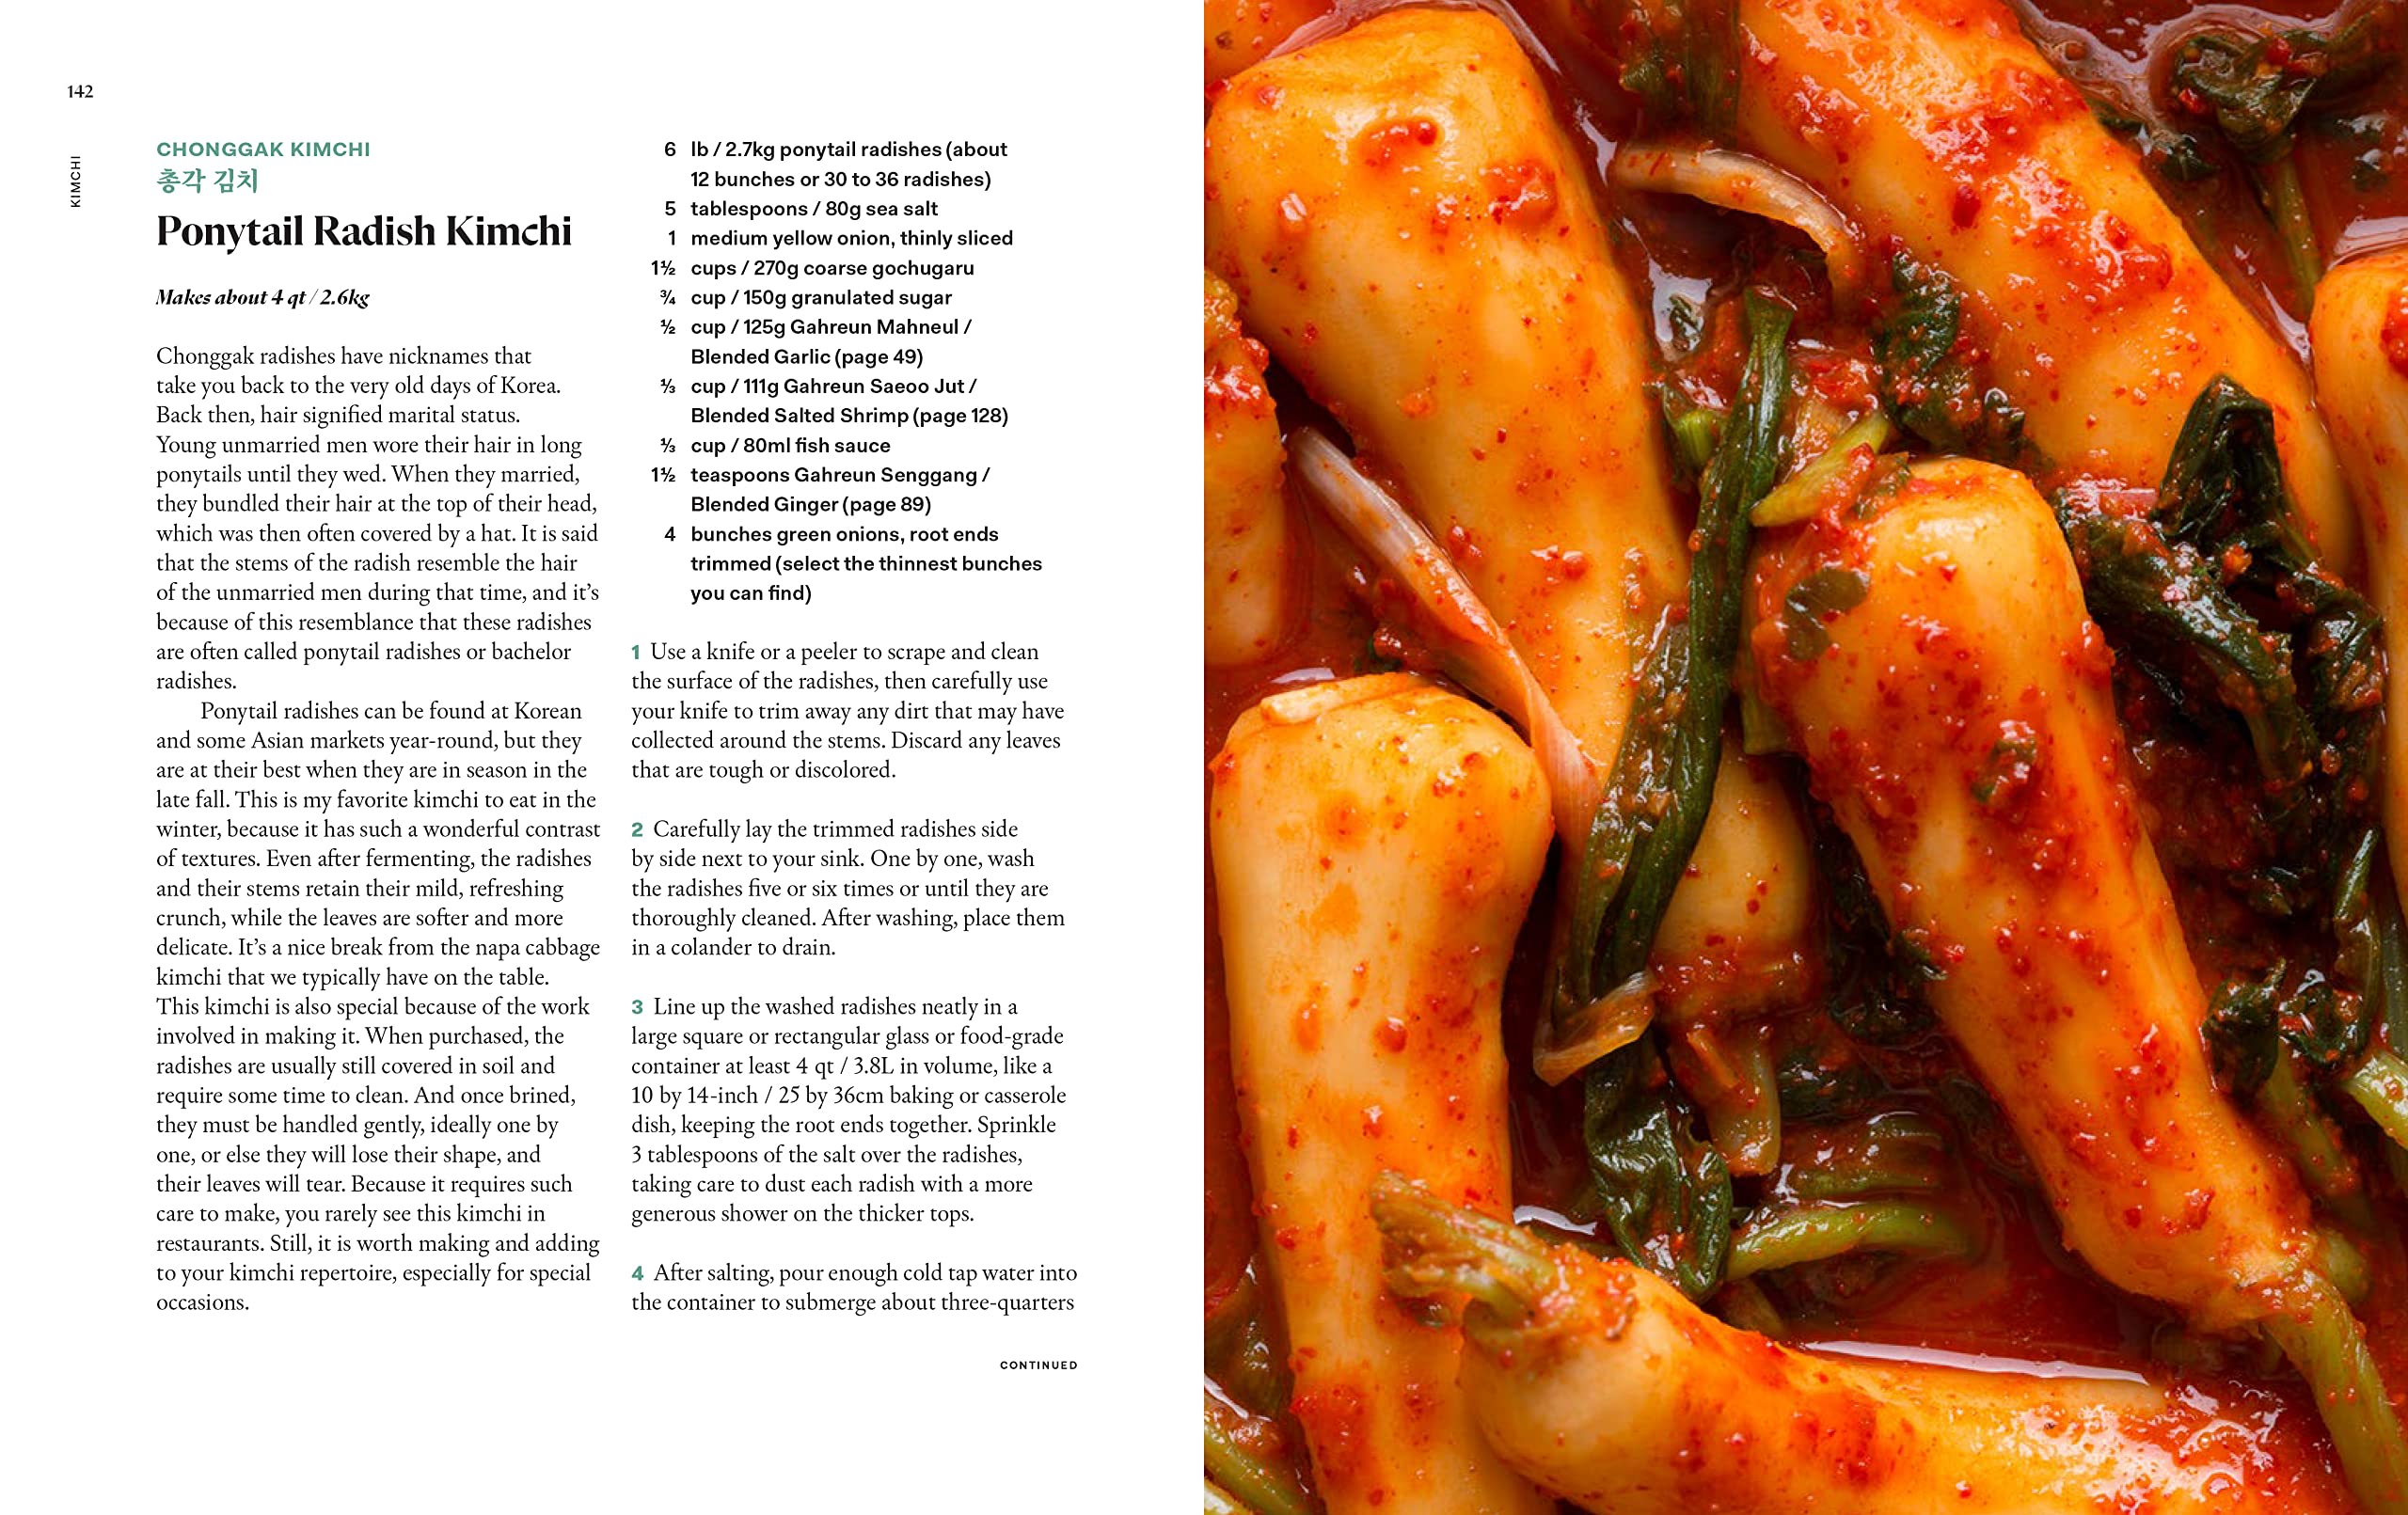 Sohn-mat: Recipes and Flavors of Korean Home Cooking (Monica Lee)